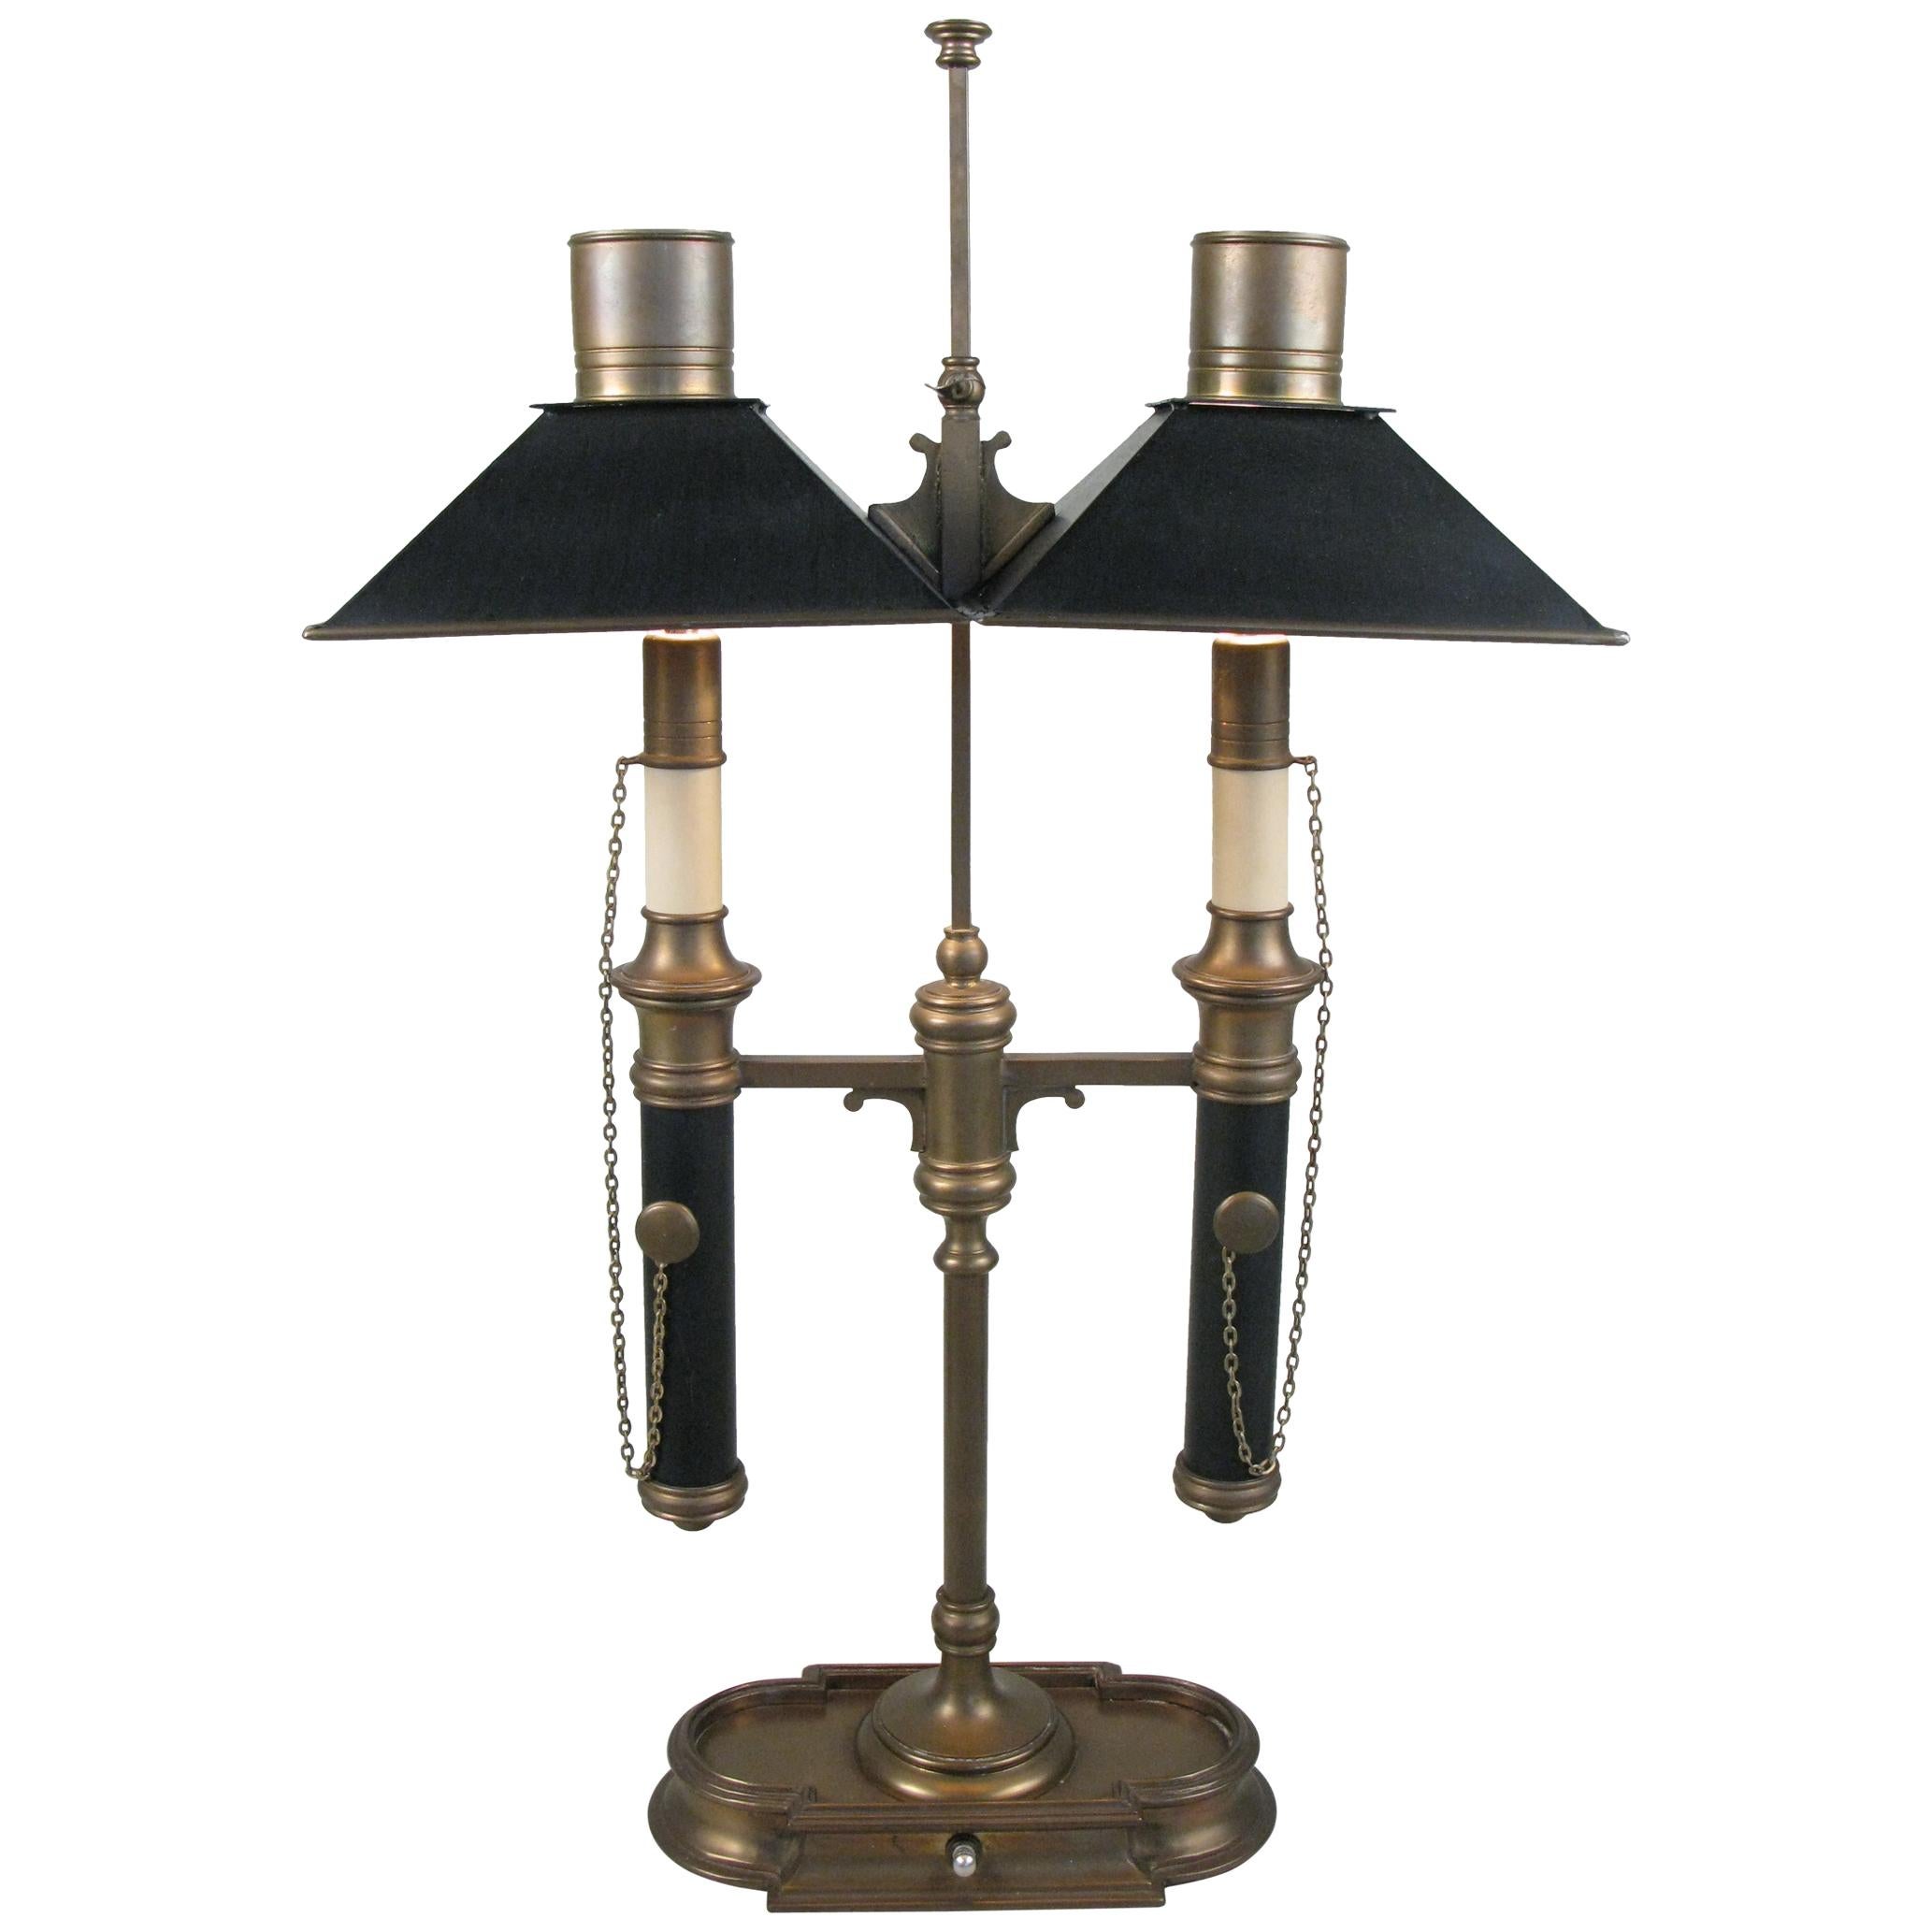 Brass & Tole Empire Style Bouillotte Table Lamp